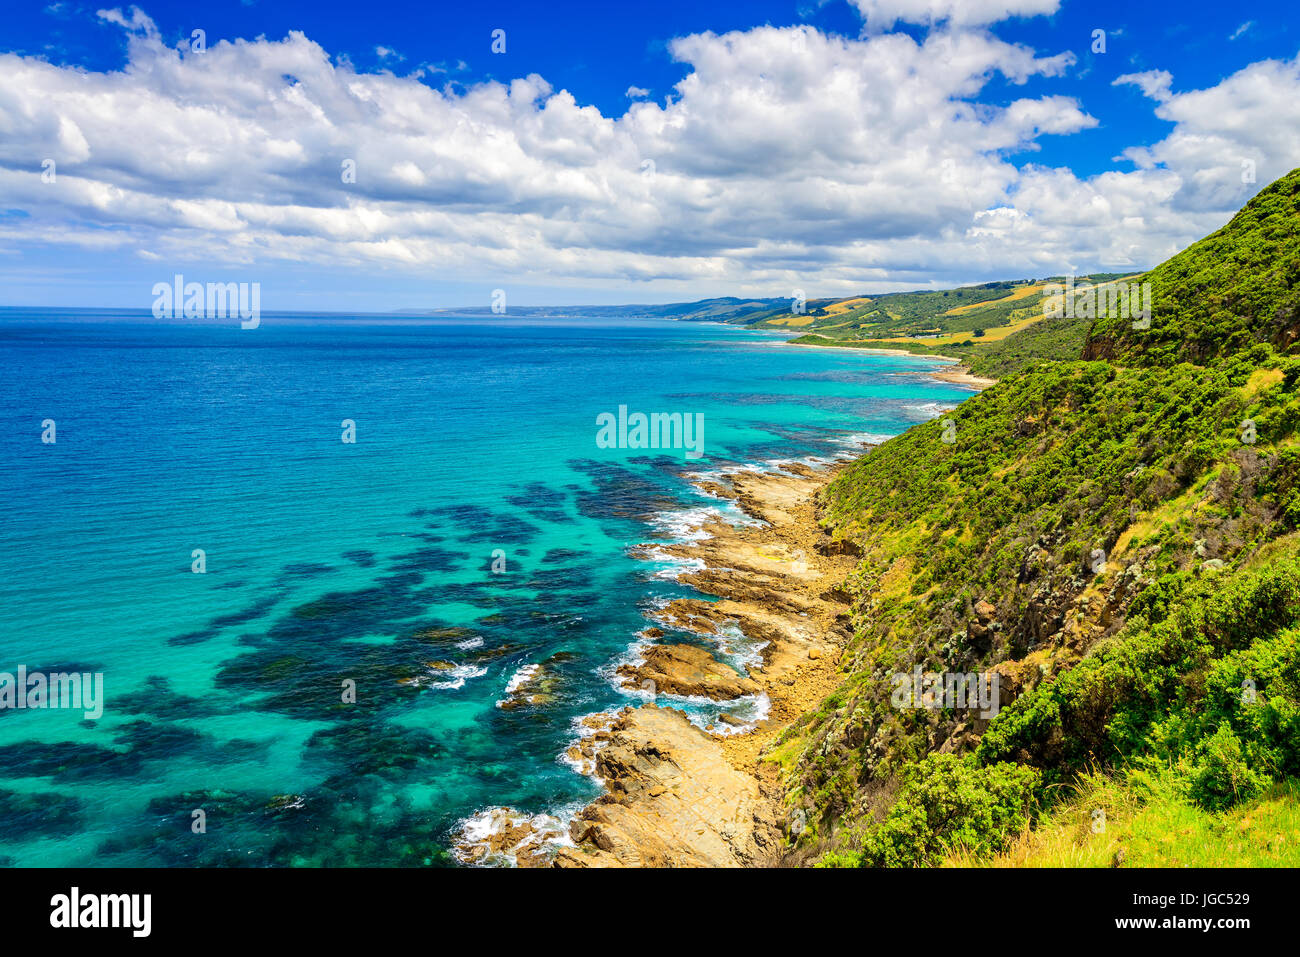 Scenic coastal landscape along the Great Ocean road in Lorne, Victoria, Australia Stock Photo